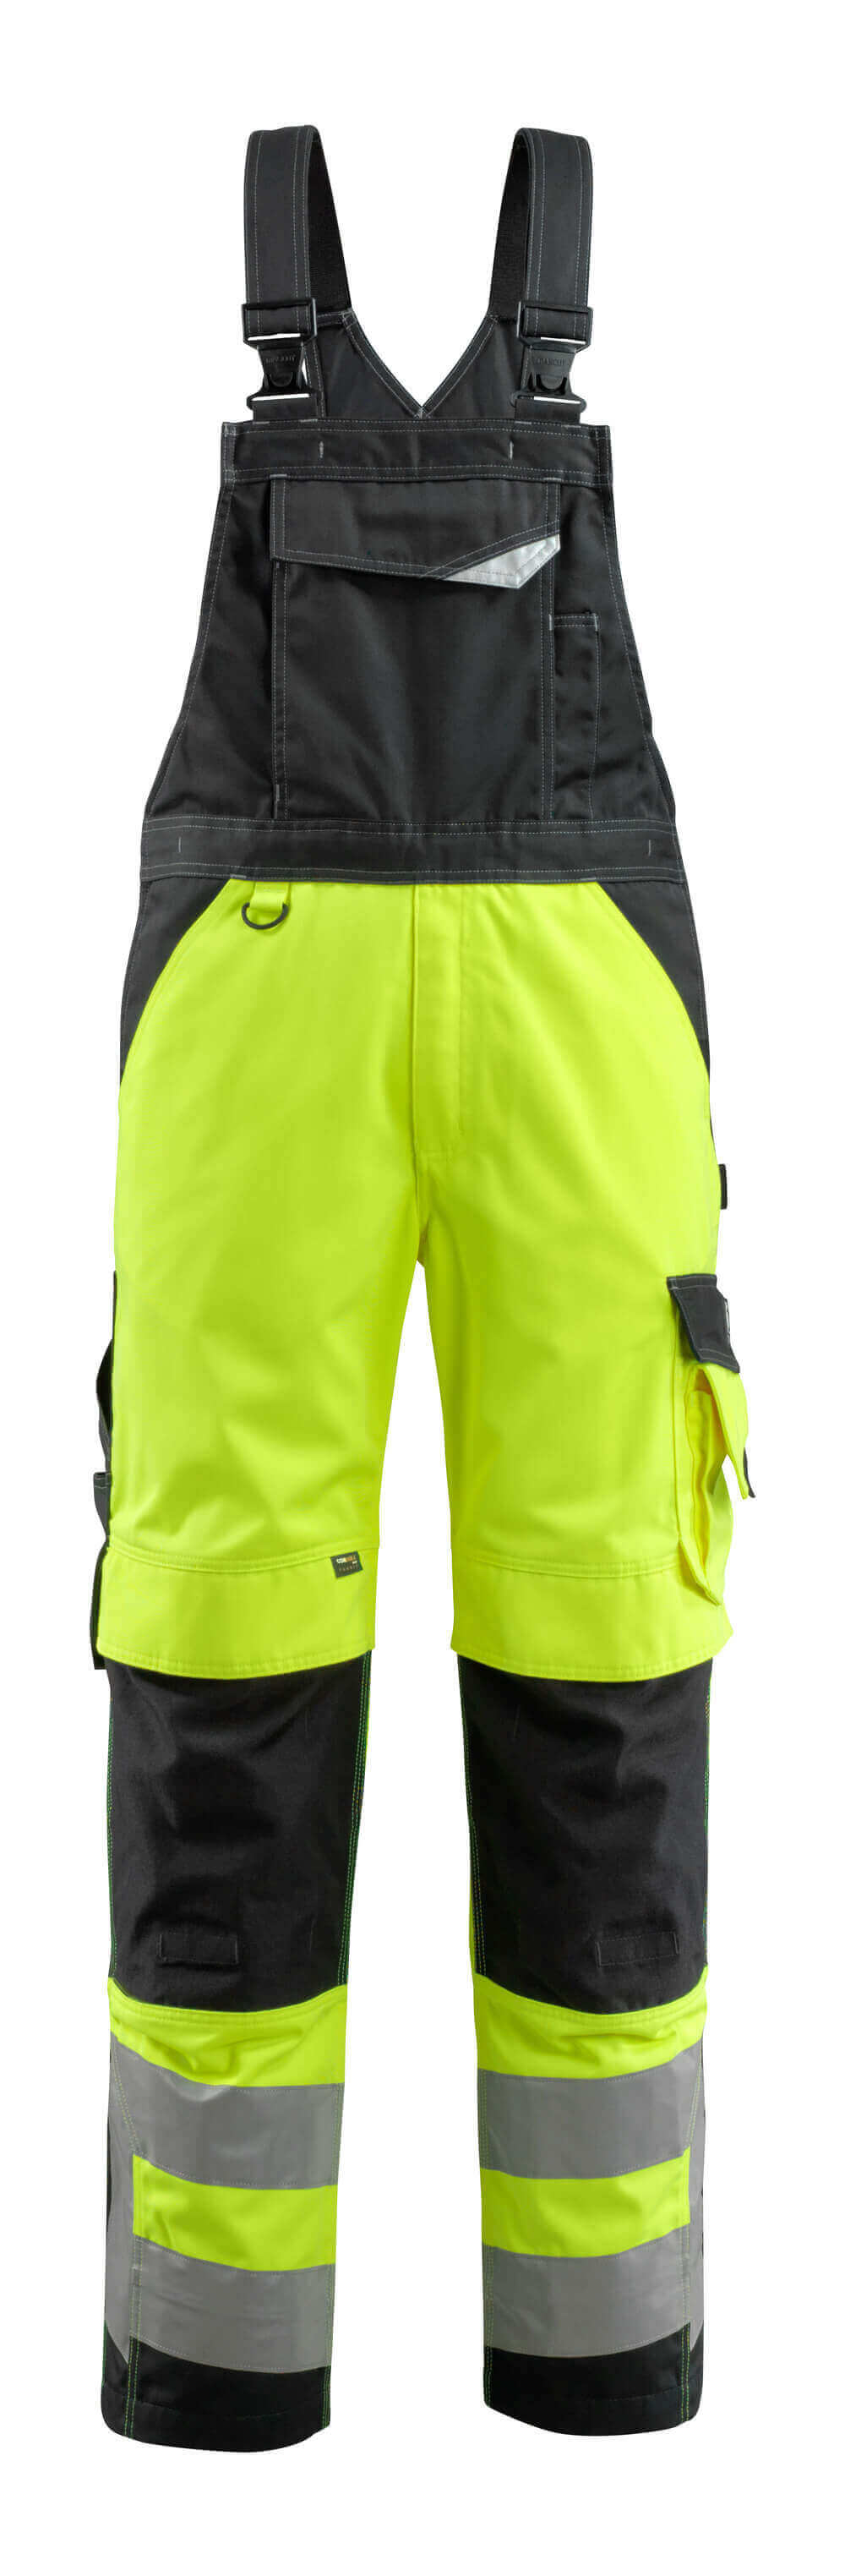 Mascot SAFE SUPREME  Newcastle Bib & Brace with kneepad pockets 15569 hi-vis yellow/black